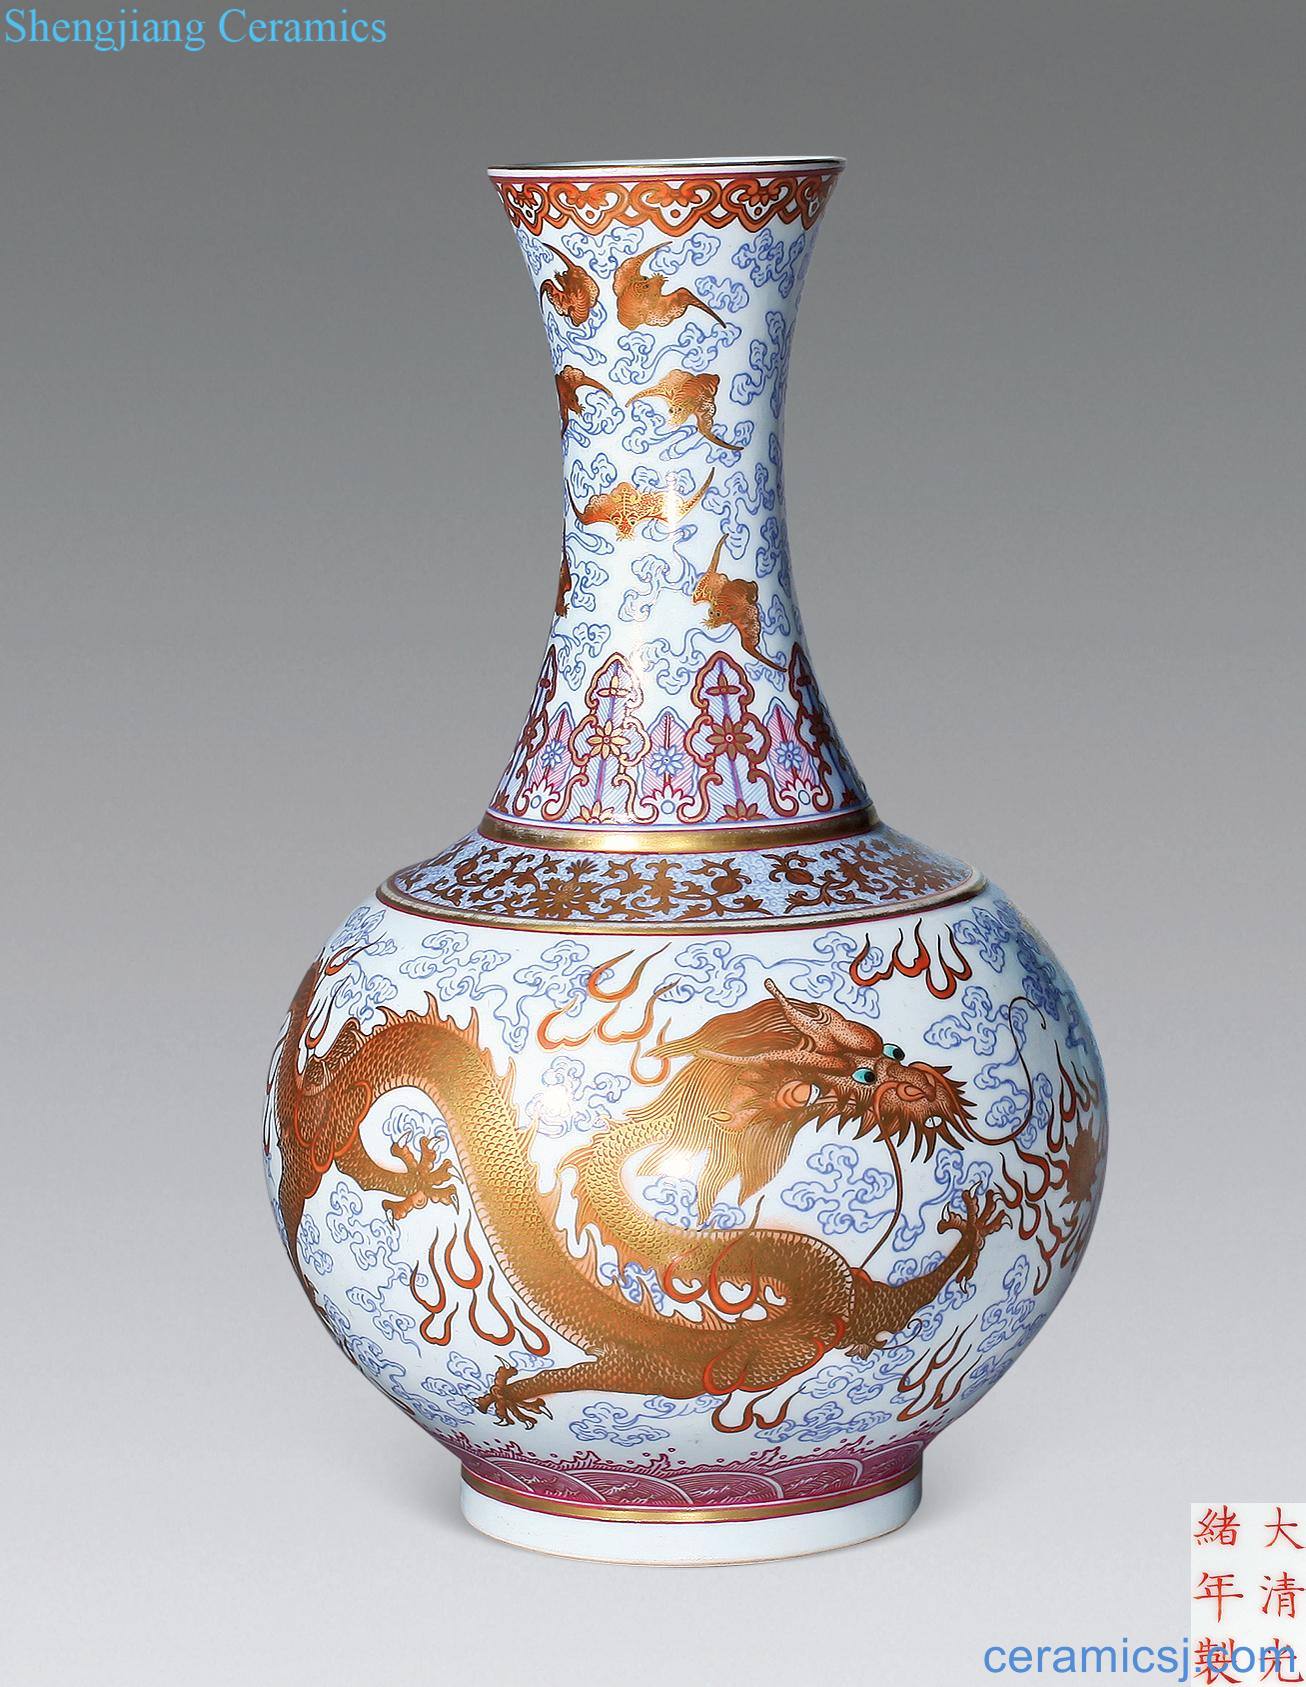 Pastel reign of qing emperor guangxu dragon design